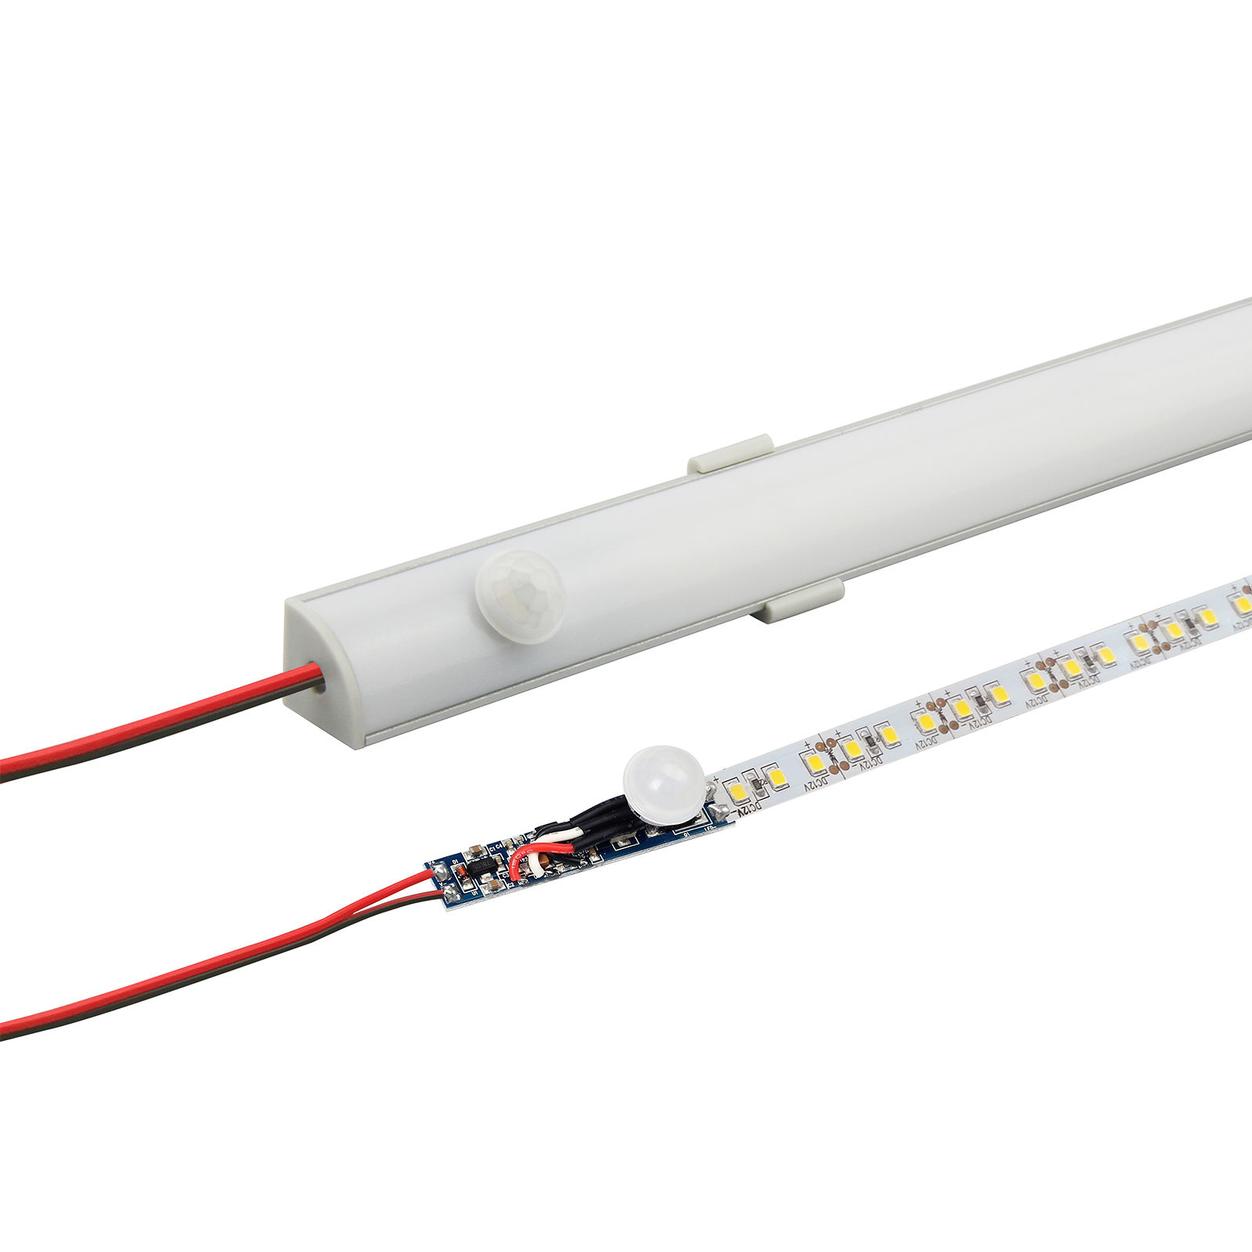 PIR Motion Sensor for installing into LED Strip Profiles